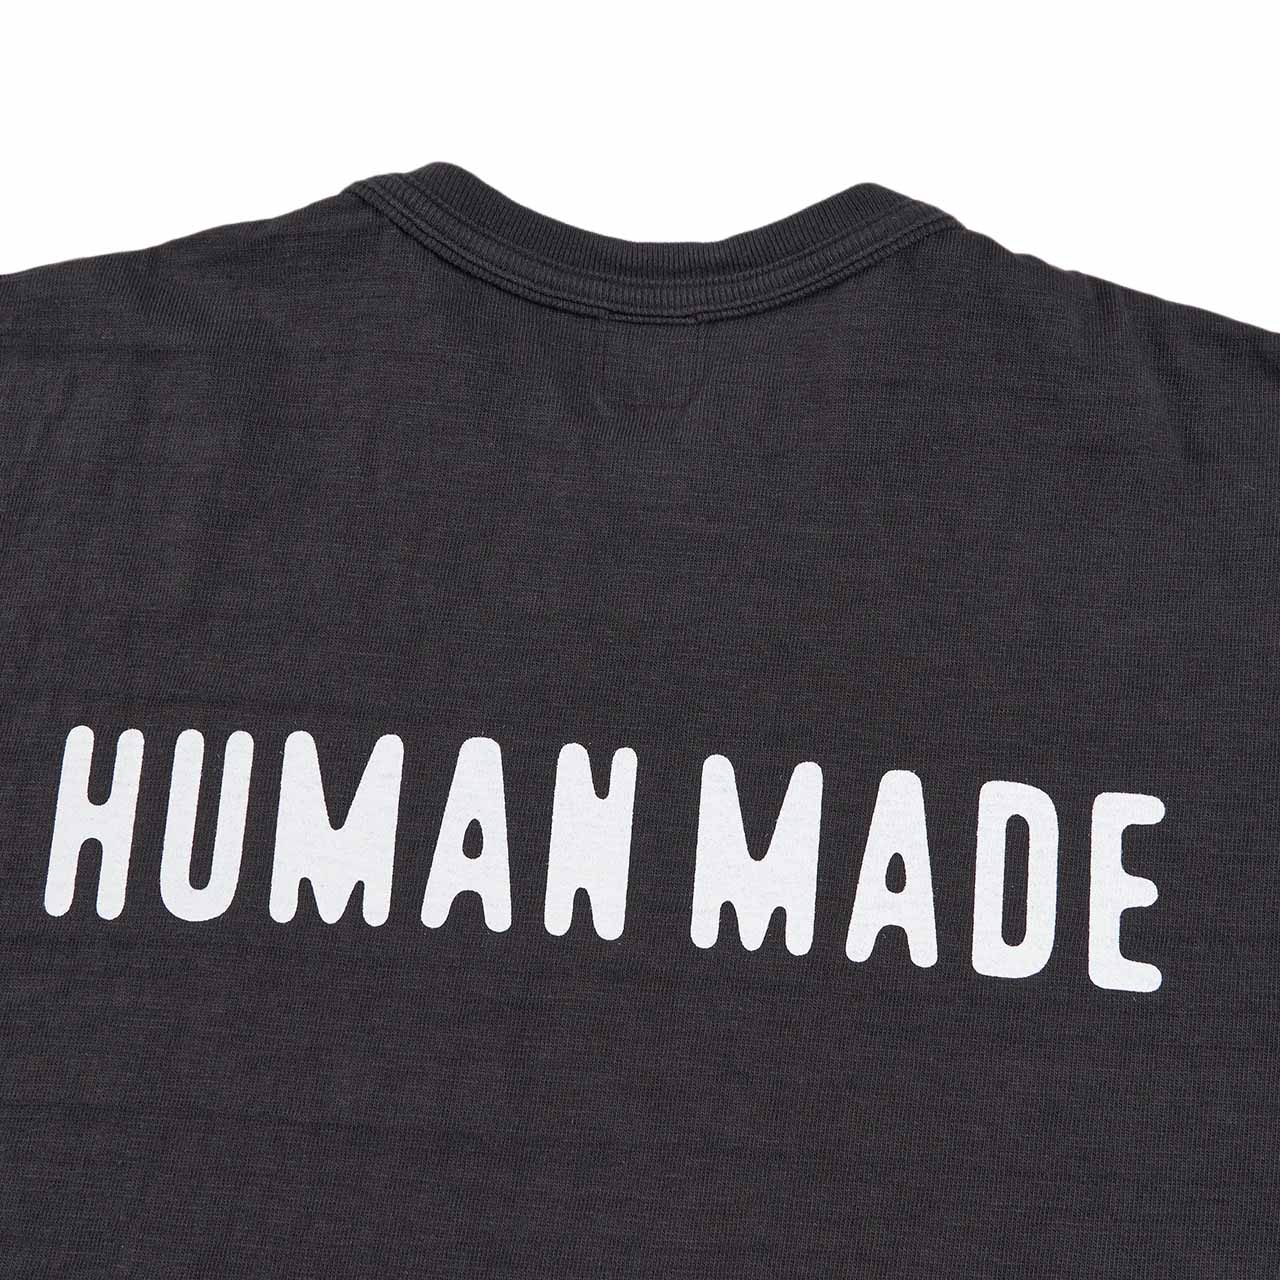 human made heart badge t-shirt (black) - HM25CS039BK - a.plus store